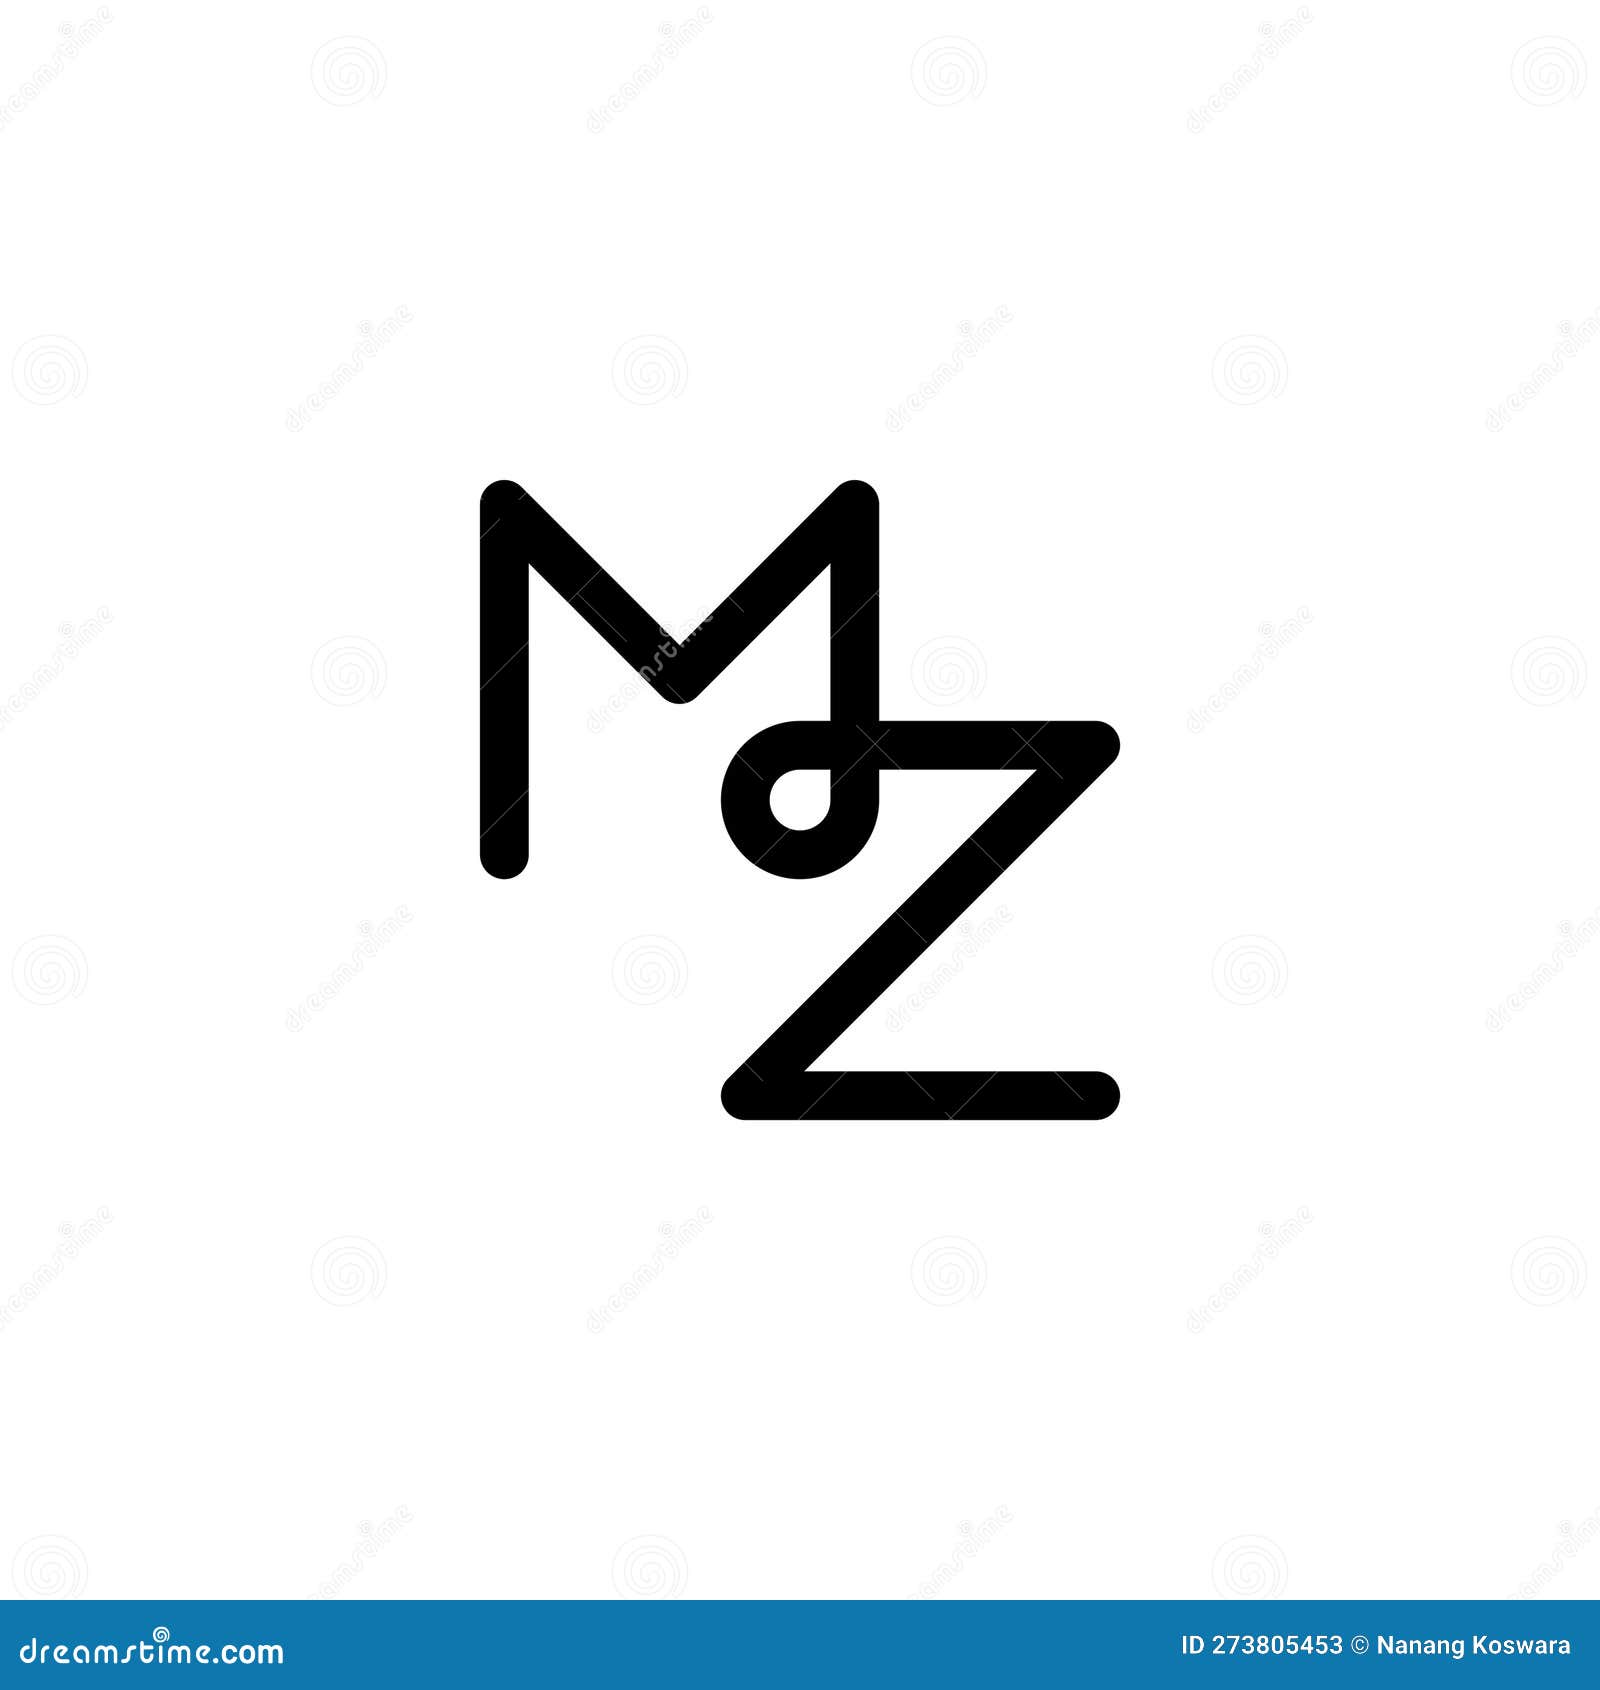 MONOGRAM Mz Vectores en stock y Arte vectorial  Monogram logo letters,  Stylish alphabets, Monogram